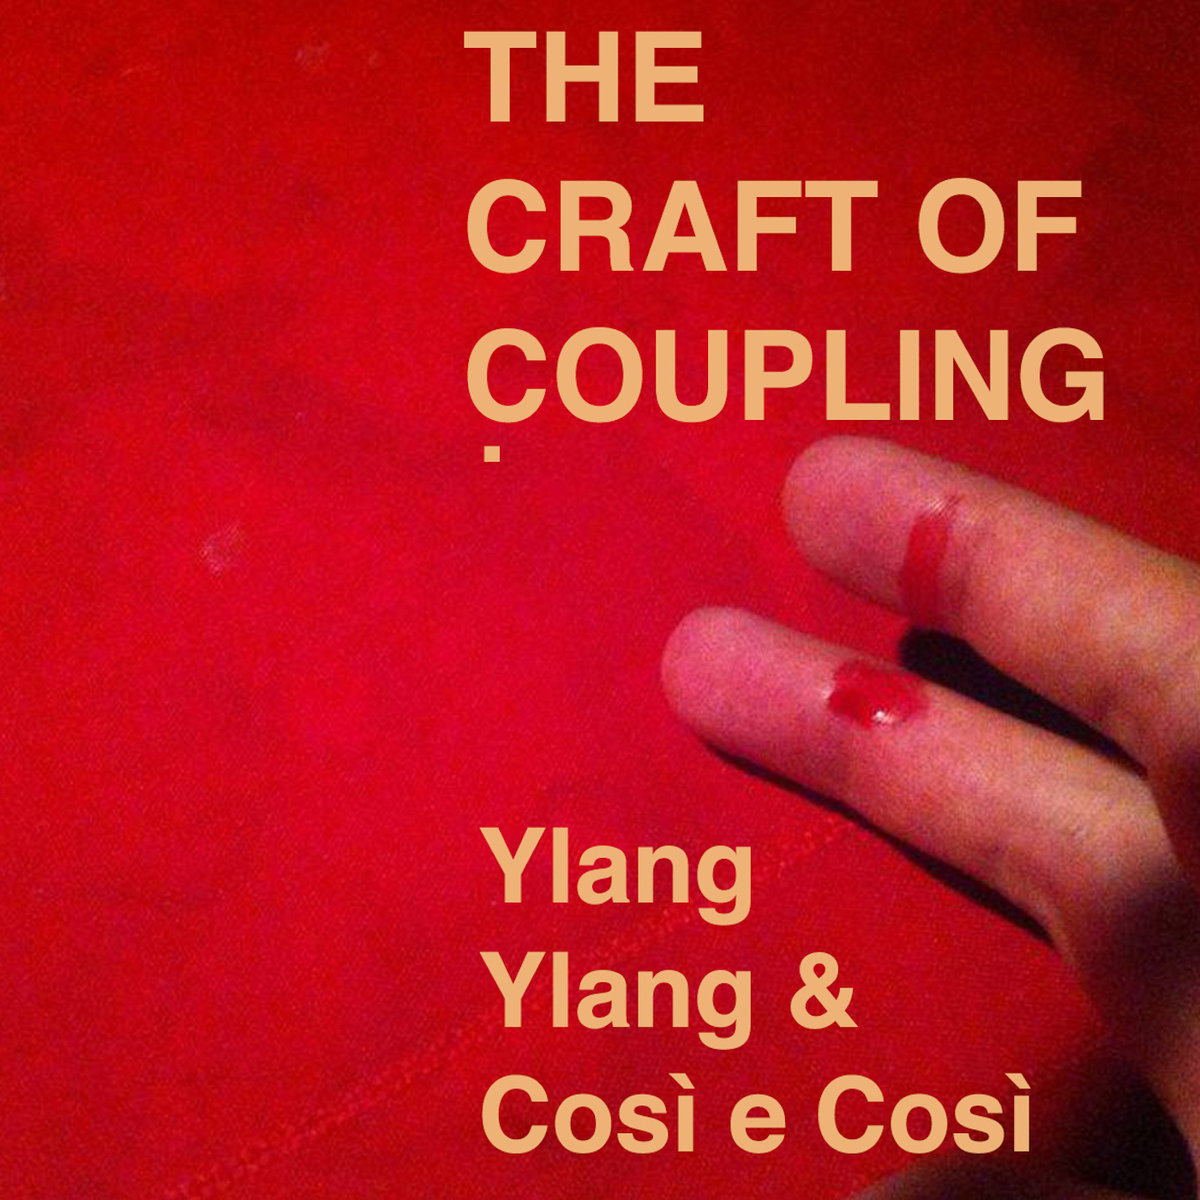 YlangYlang & Cosi e Cosi — The Craft of Coupling